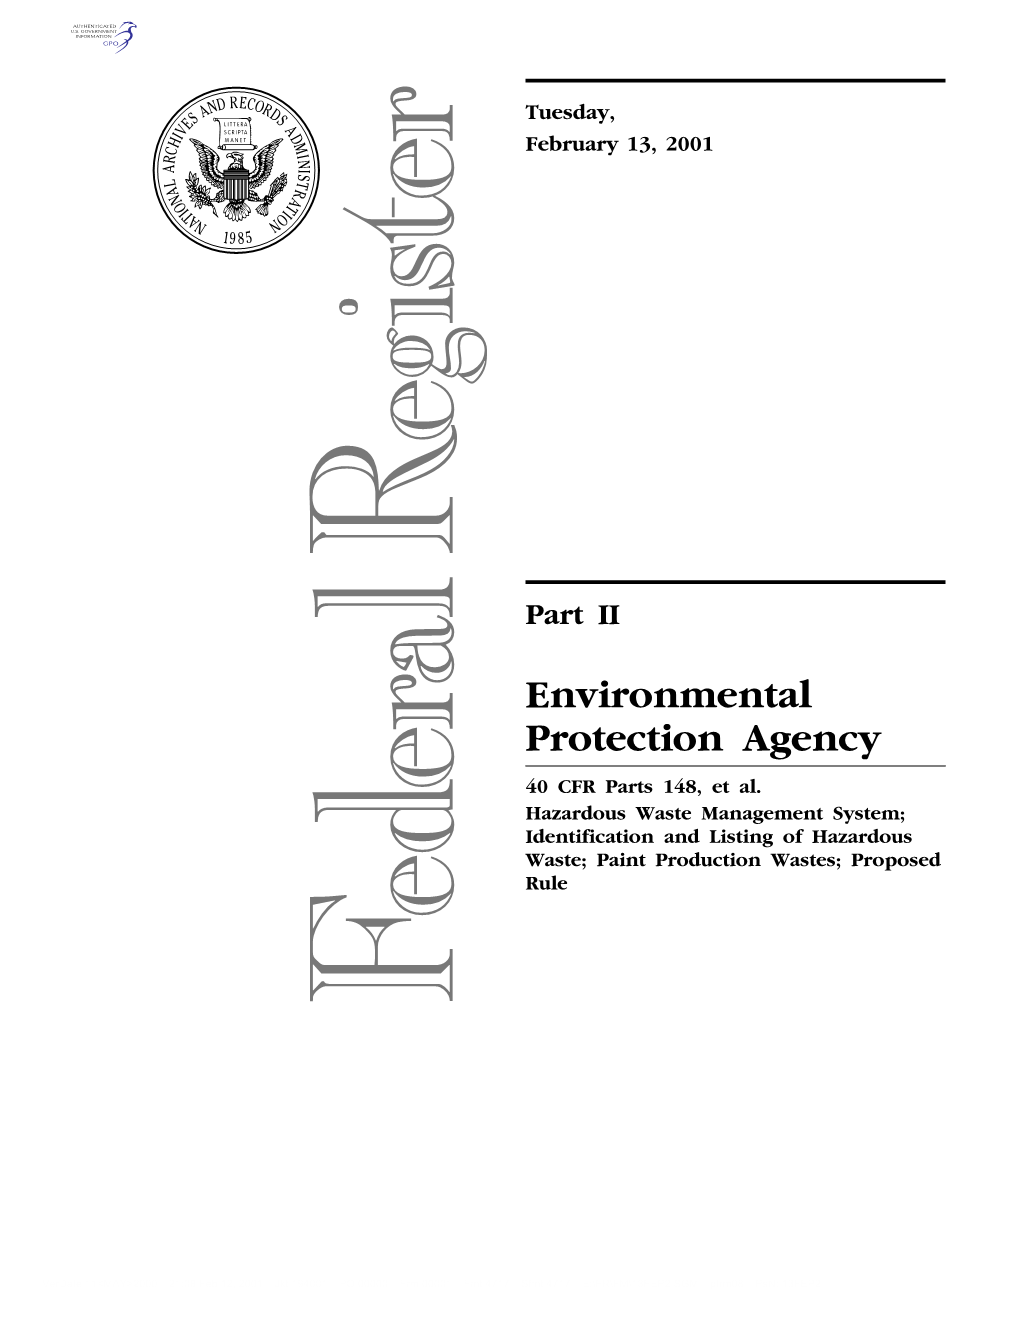 Environmental Protection Agency 40 CFR Parts 148, Et Al